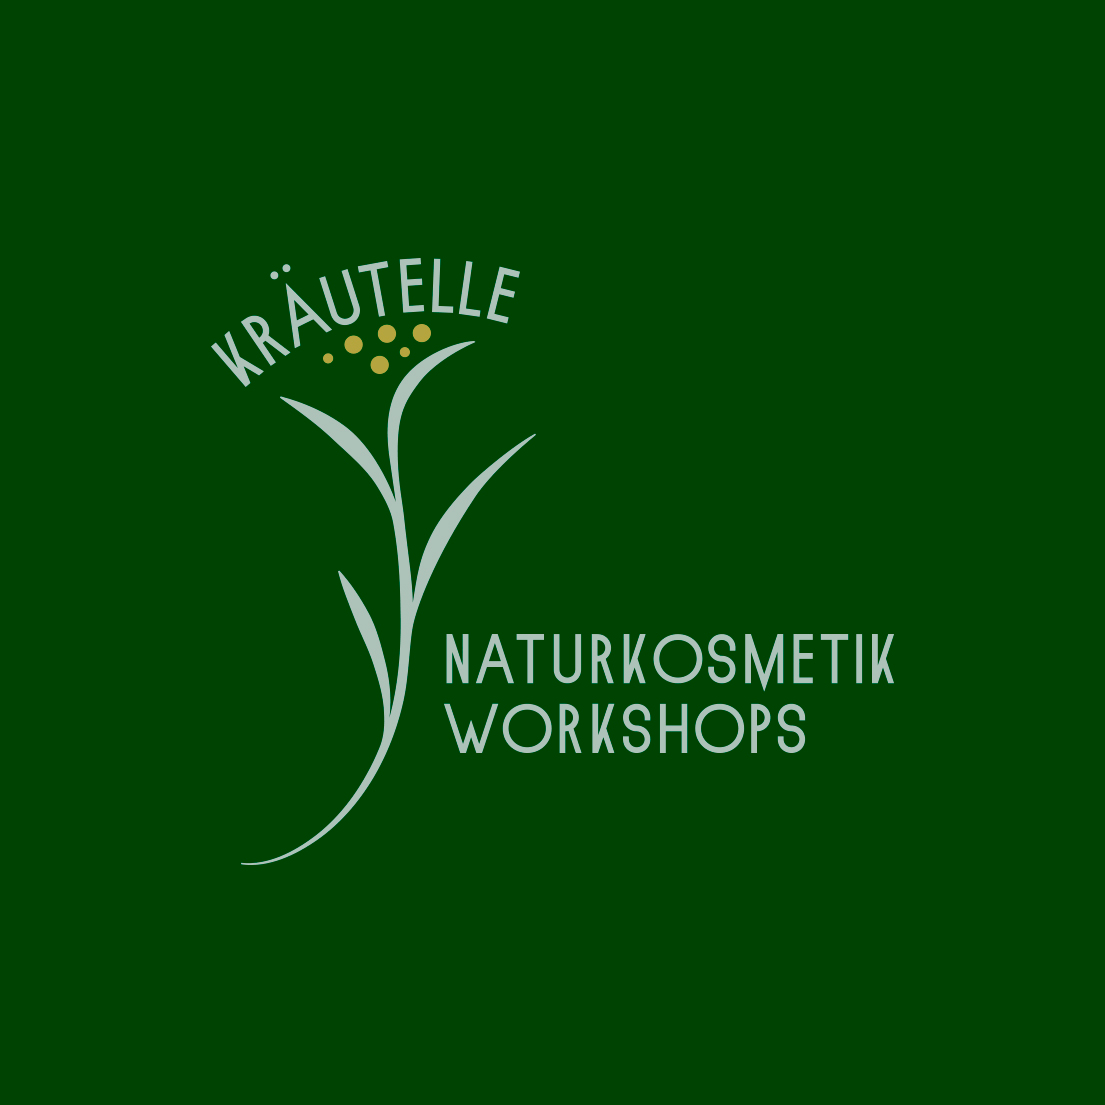 Bilder Kraeutelle - Naturkosmetik Workshops